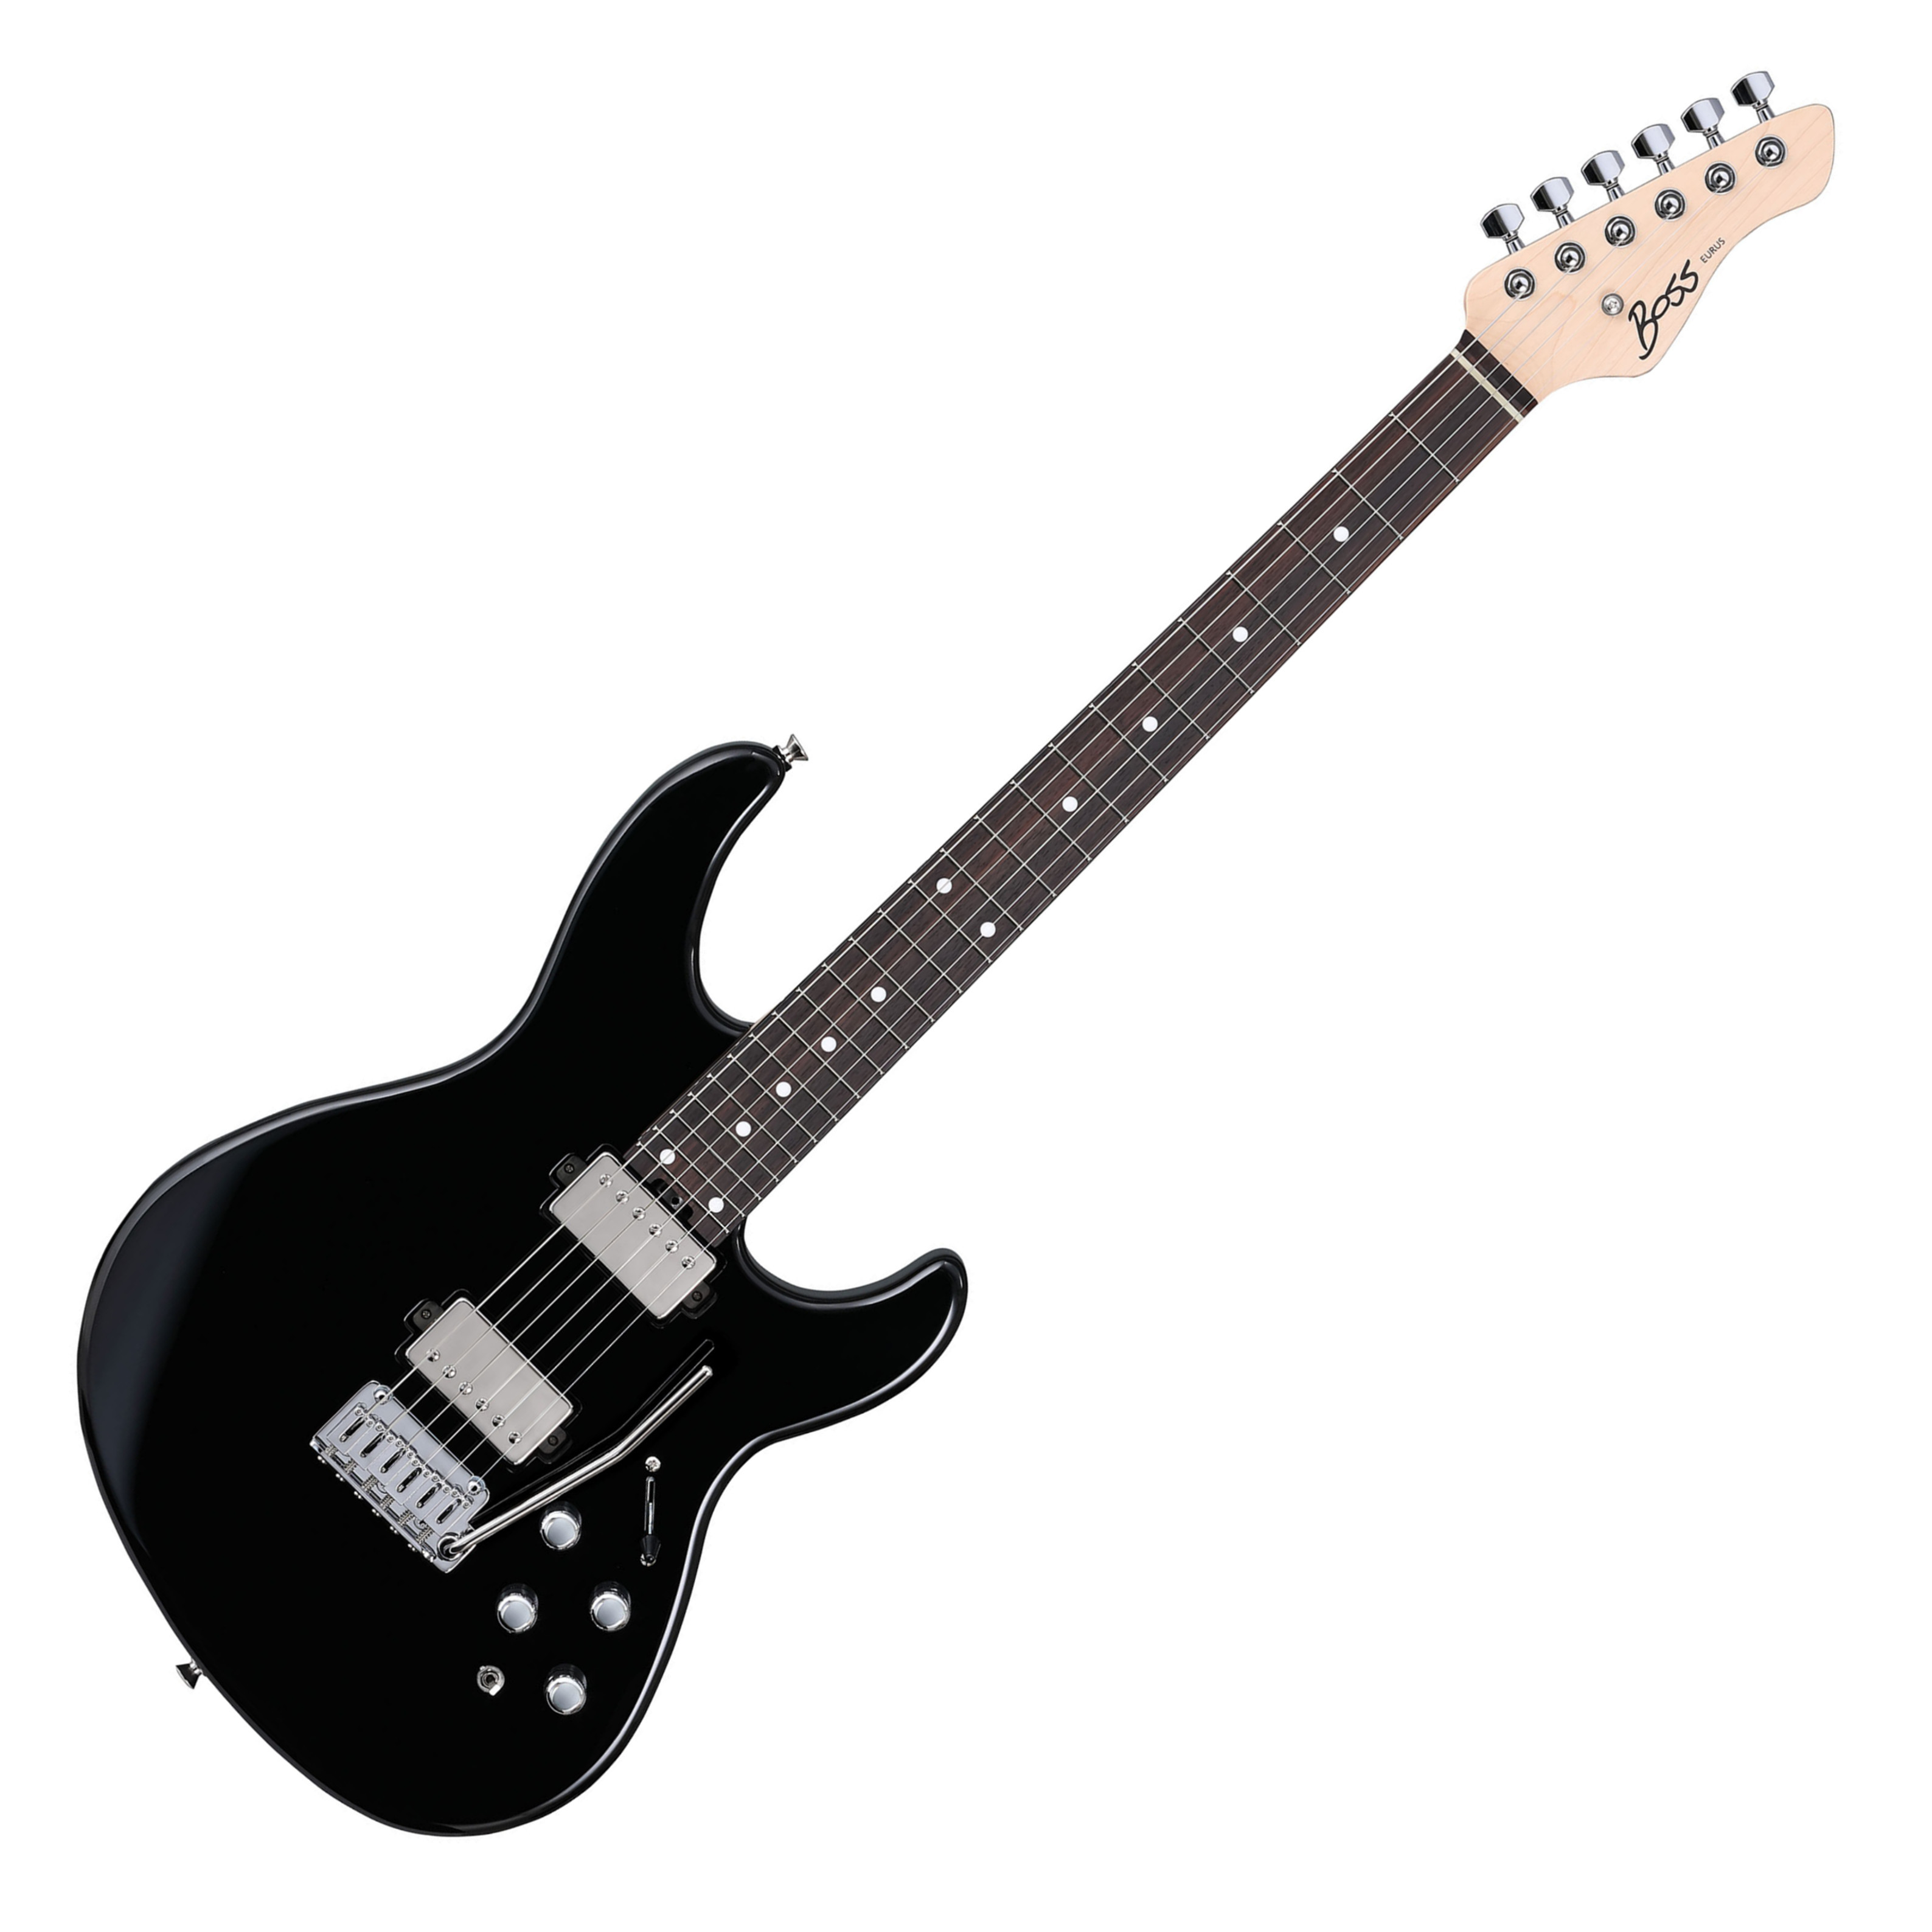 Boss Eurus Gs-1 Hh Trem Rw - Black - Modeling guitar - Variation 5